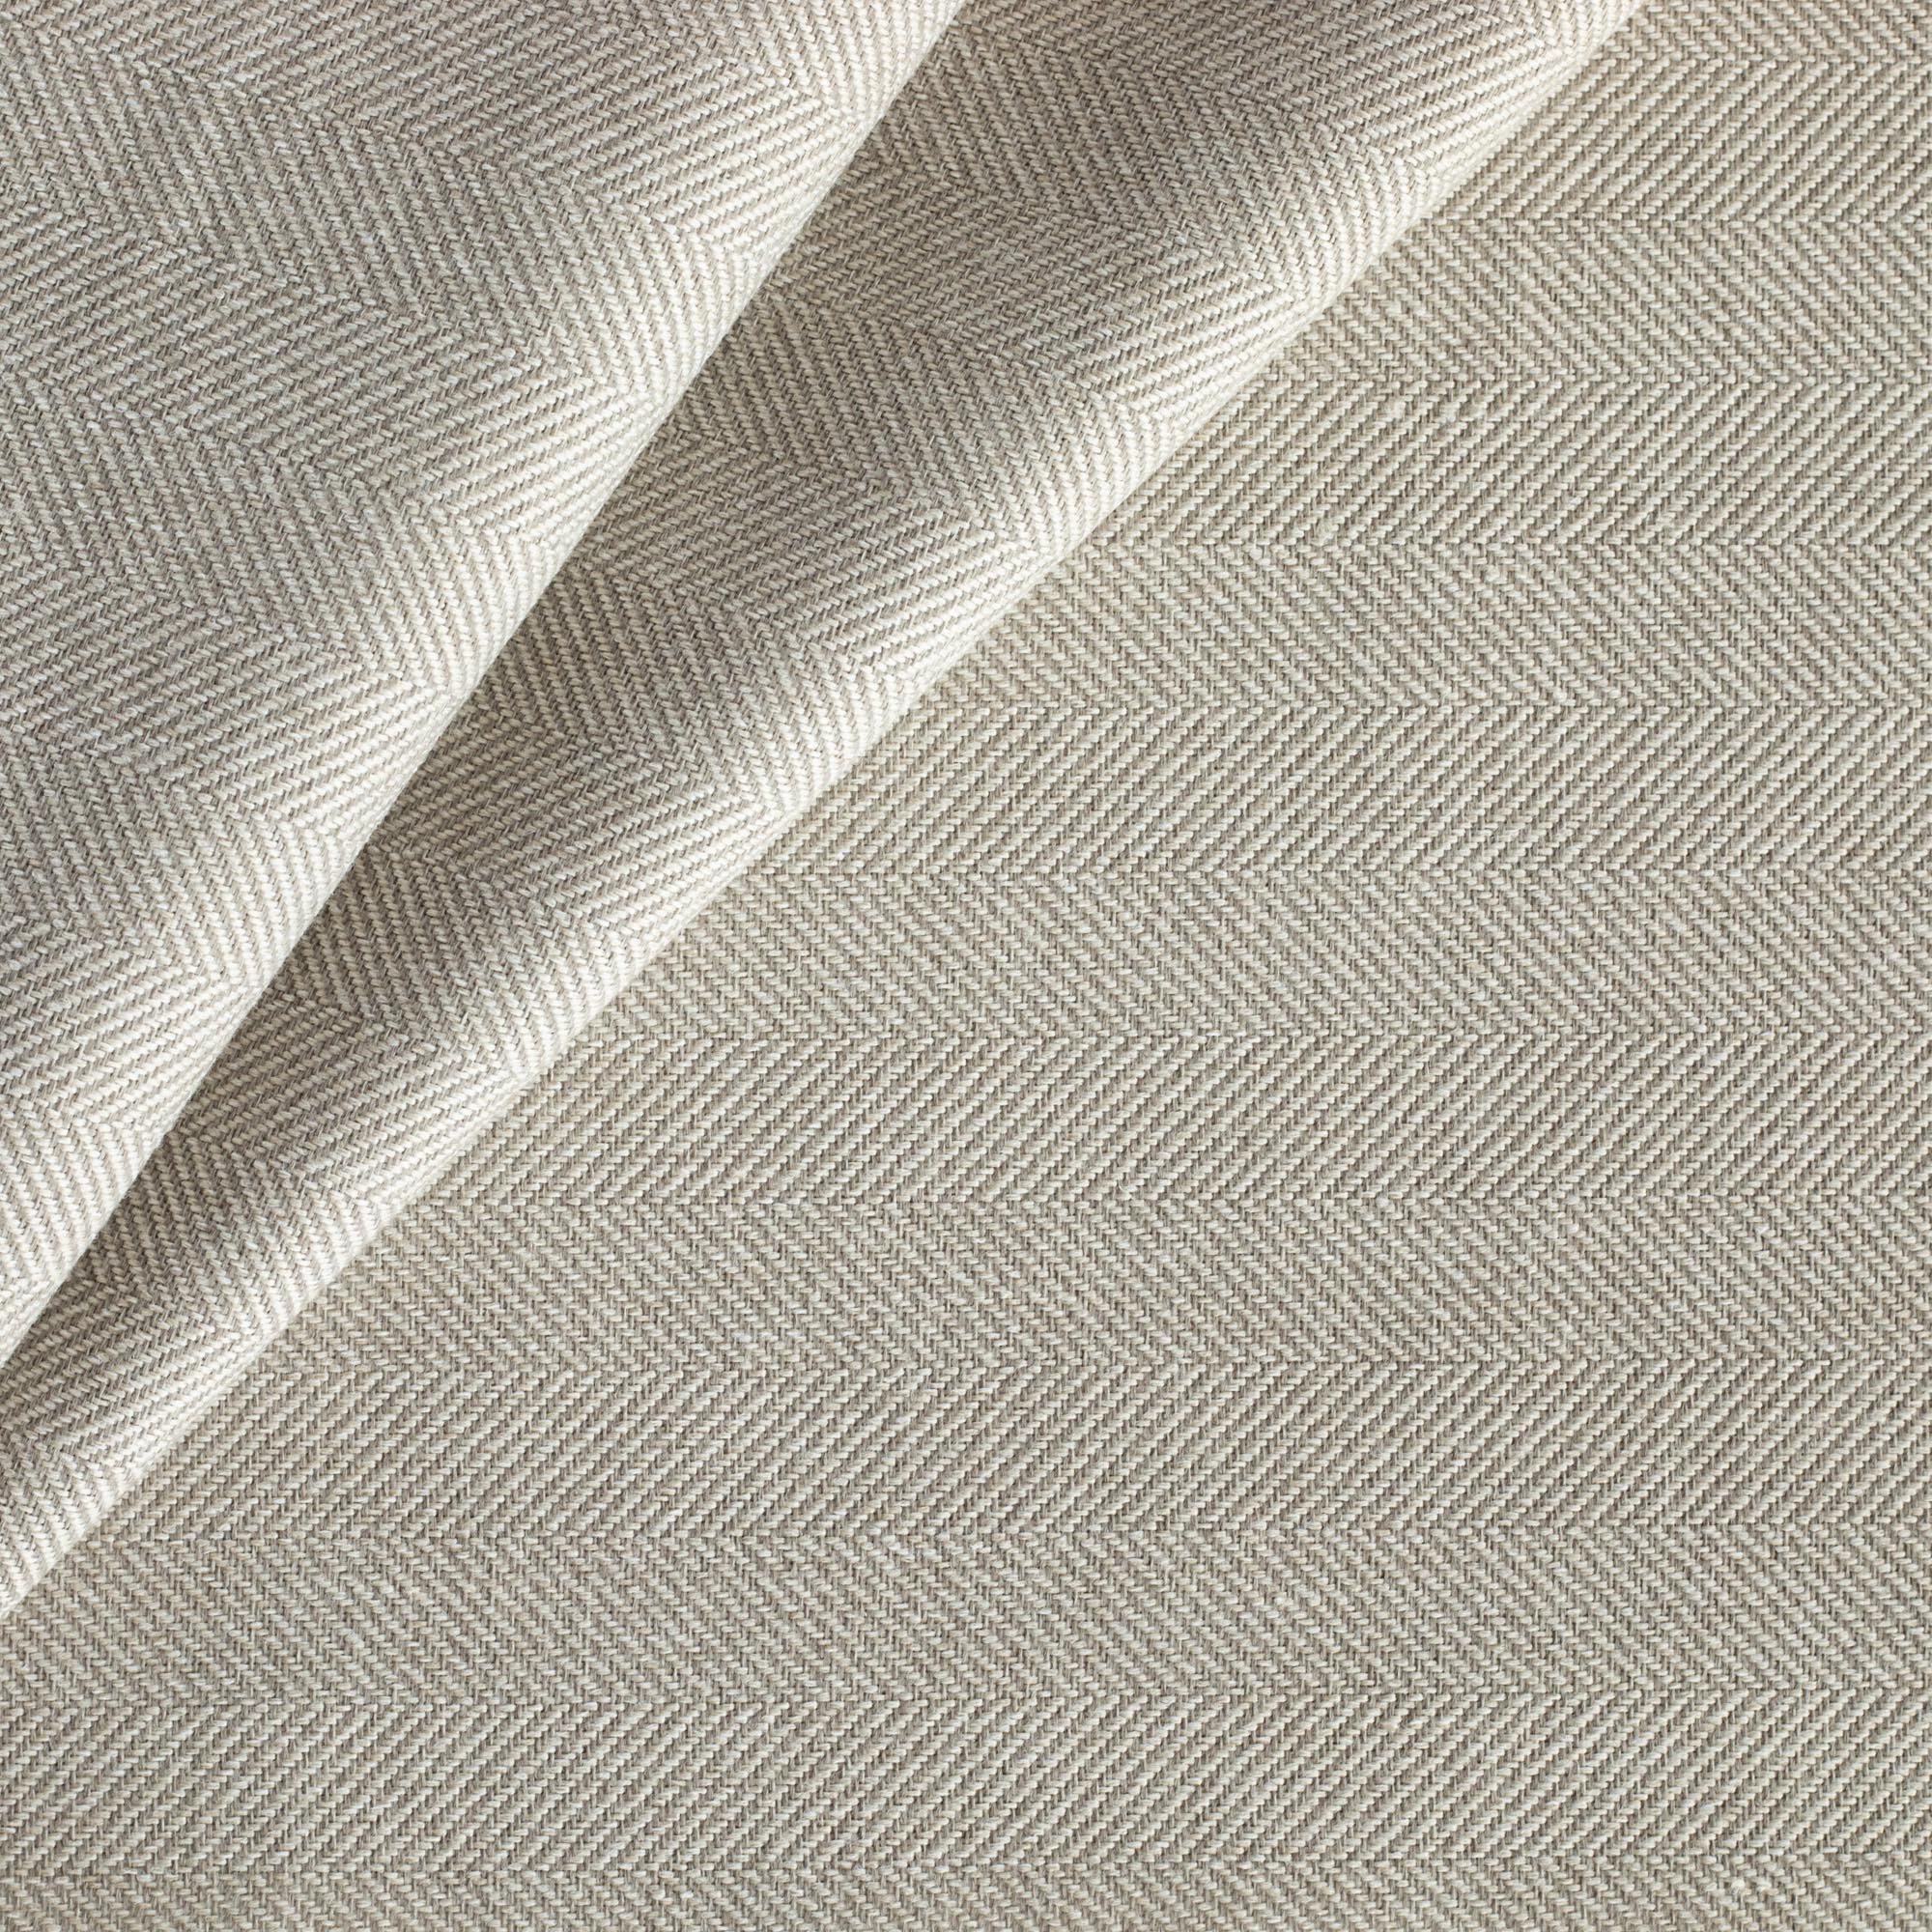 Grafton Portobello, a gray herringbone upholstery fabric from Tonic Living